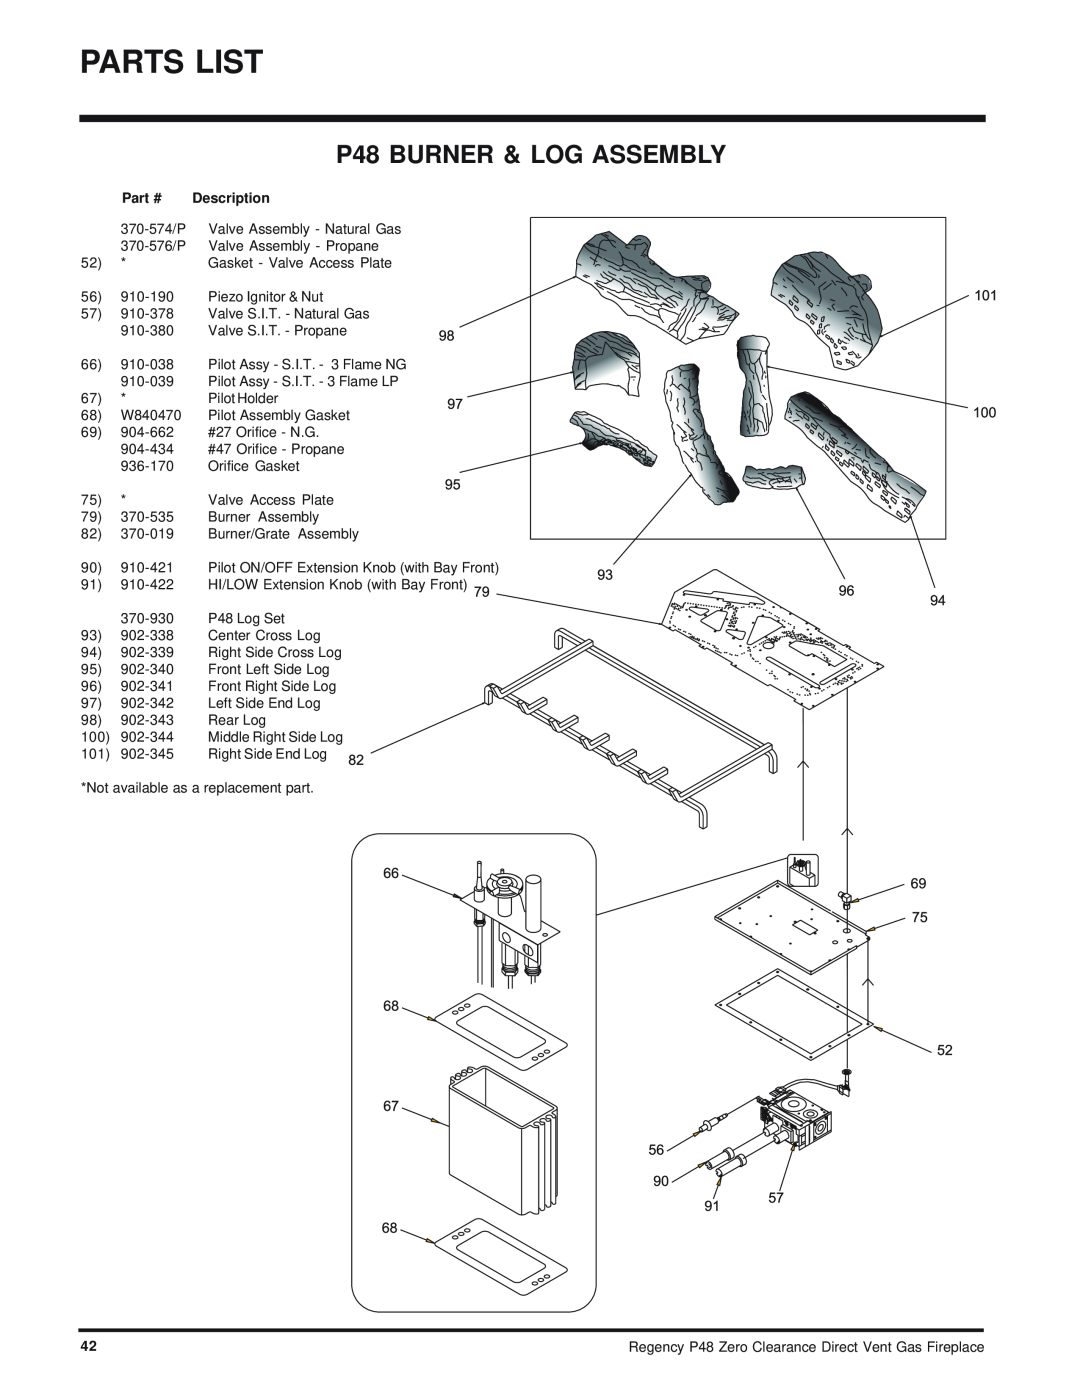 Regency P48-NG, P48-LP installation manual P48 BURNER & LOG ASSEMBLY, Part #, Description 